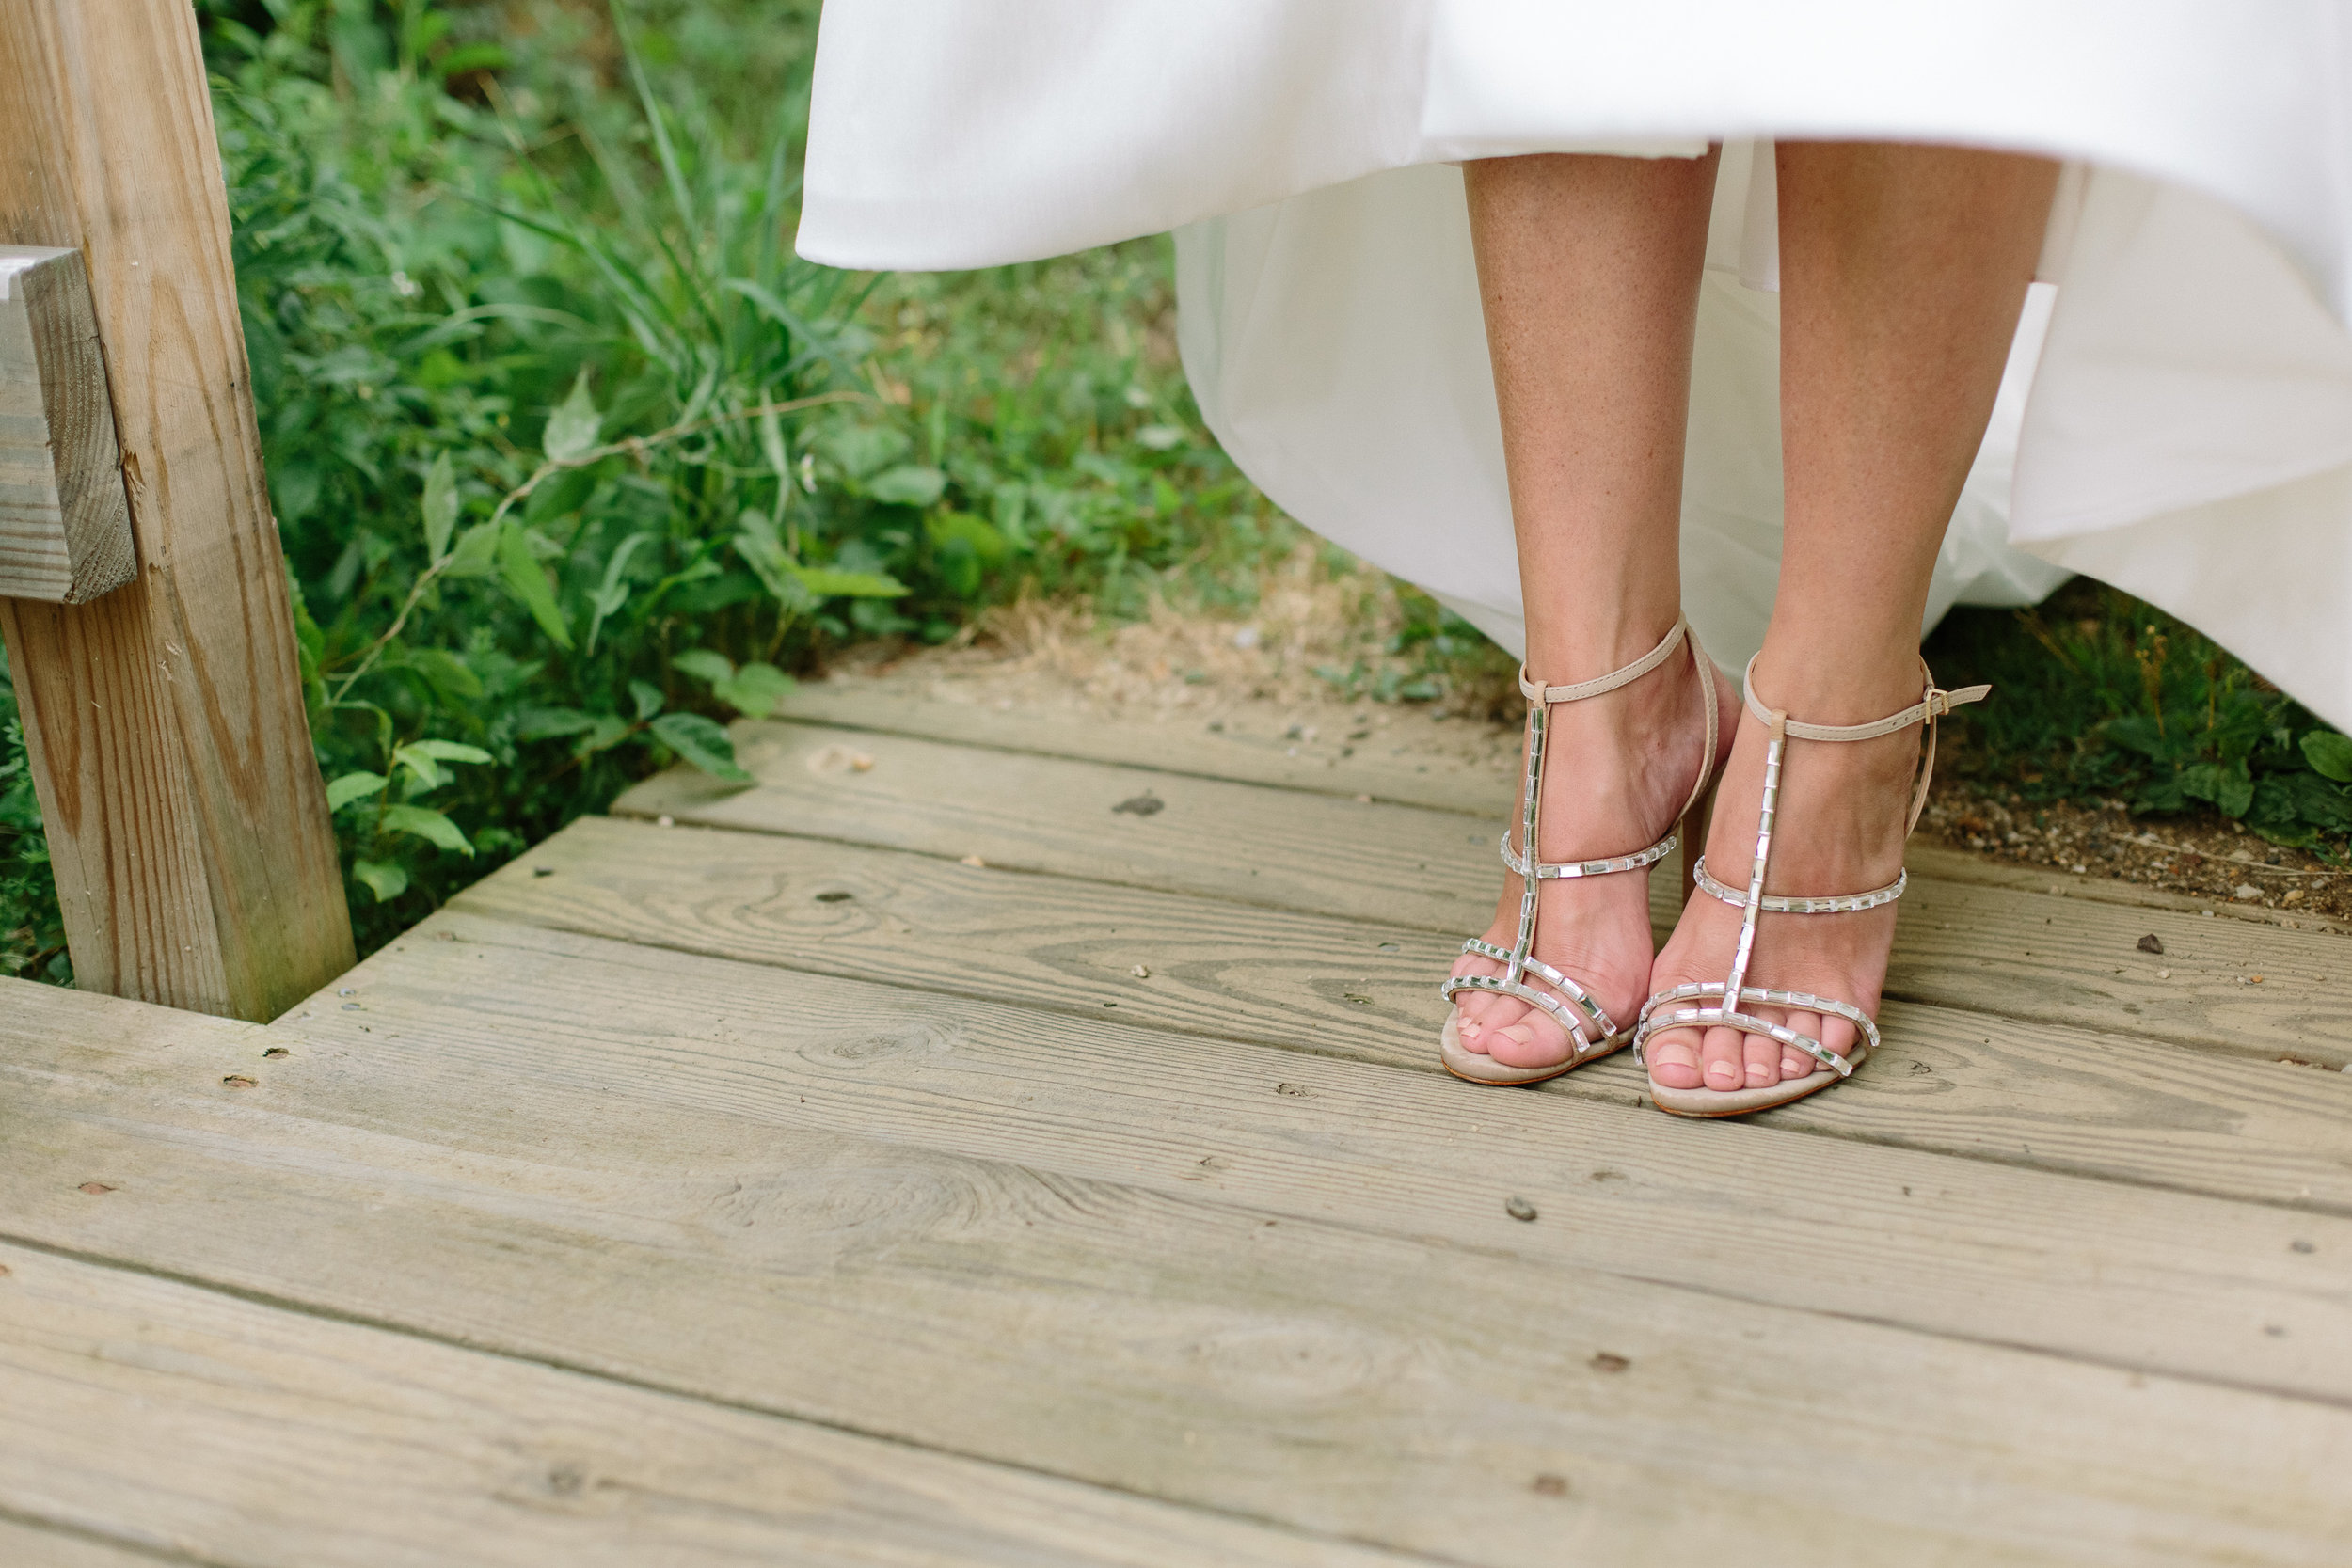 schutz-wedding-shoes-photo